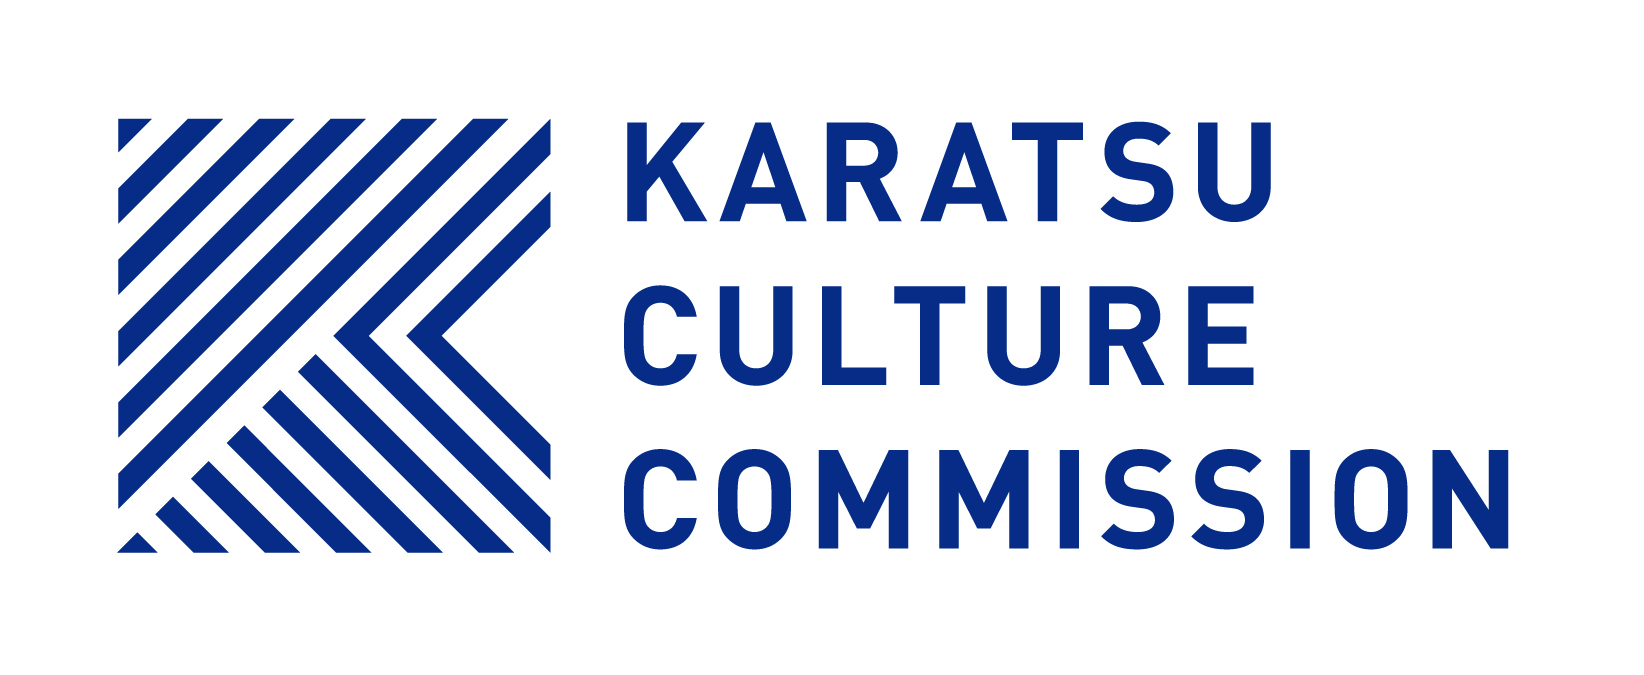 KARATSU CULUTURE COMMISSION